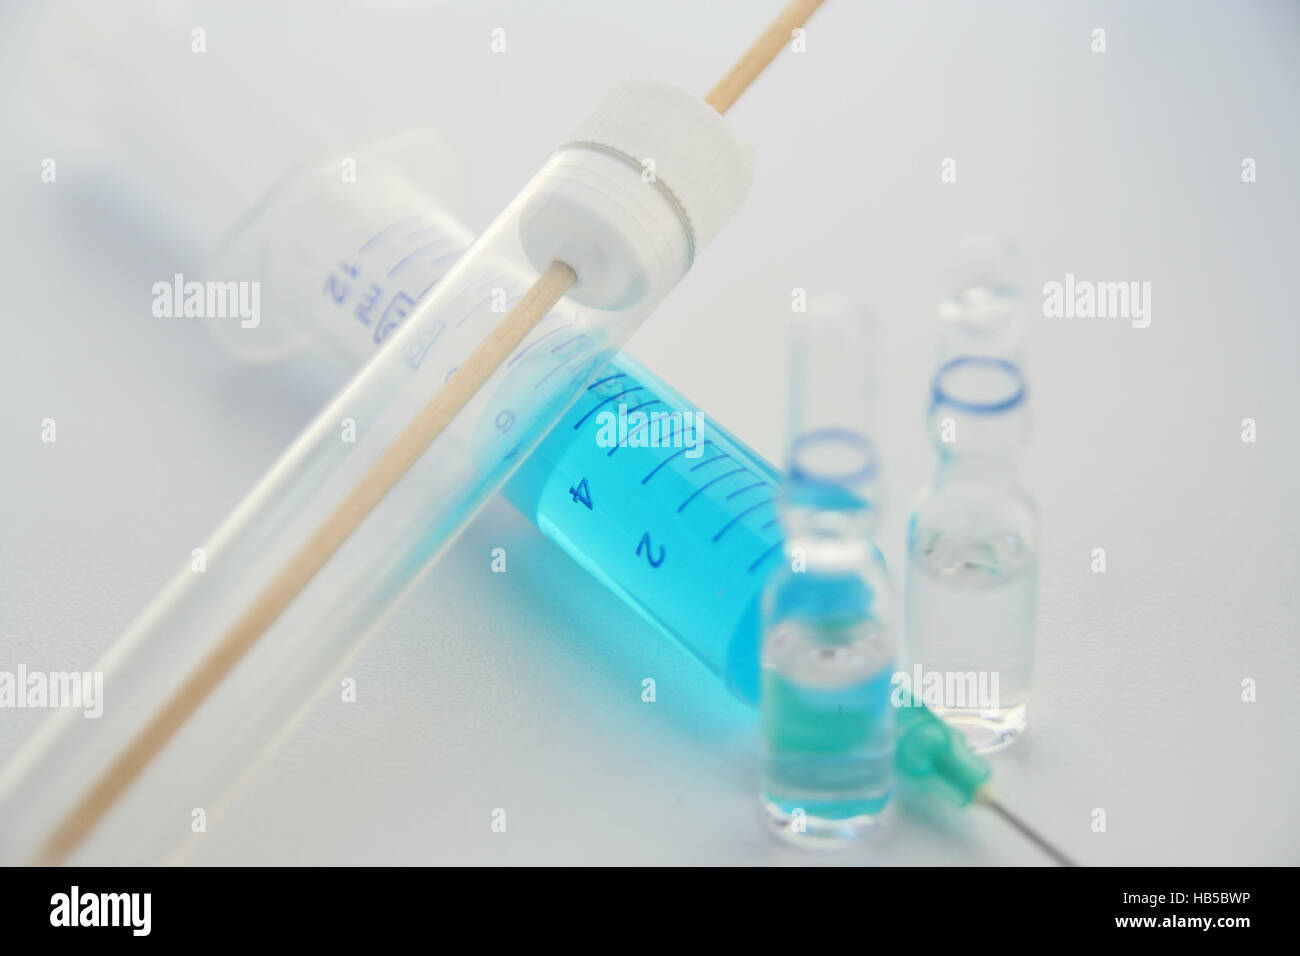 Syringe and ampule. Medical tools. Stock Photo